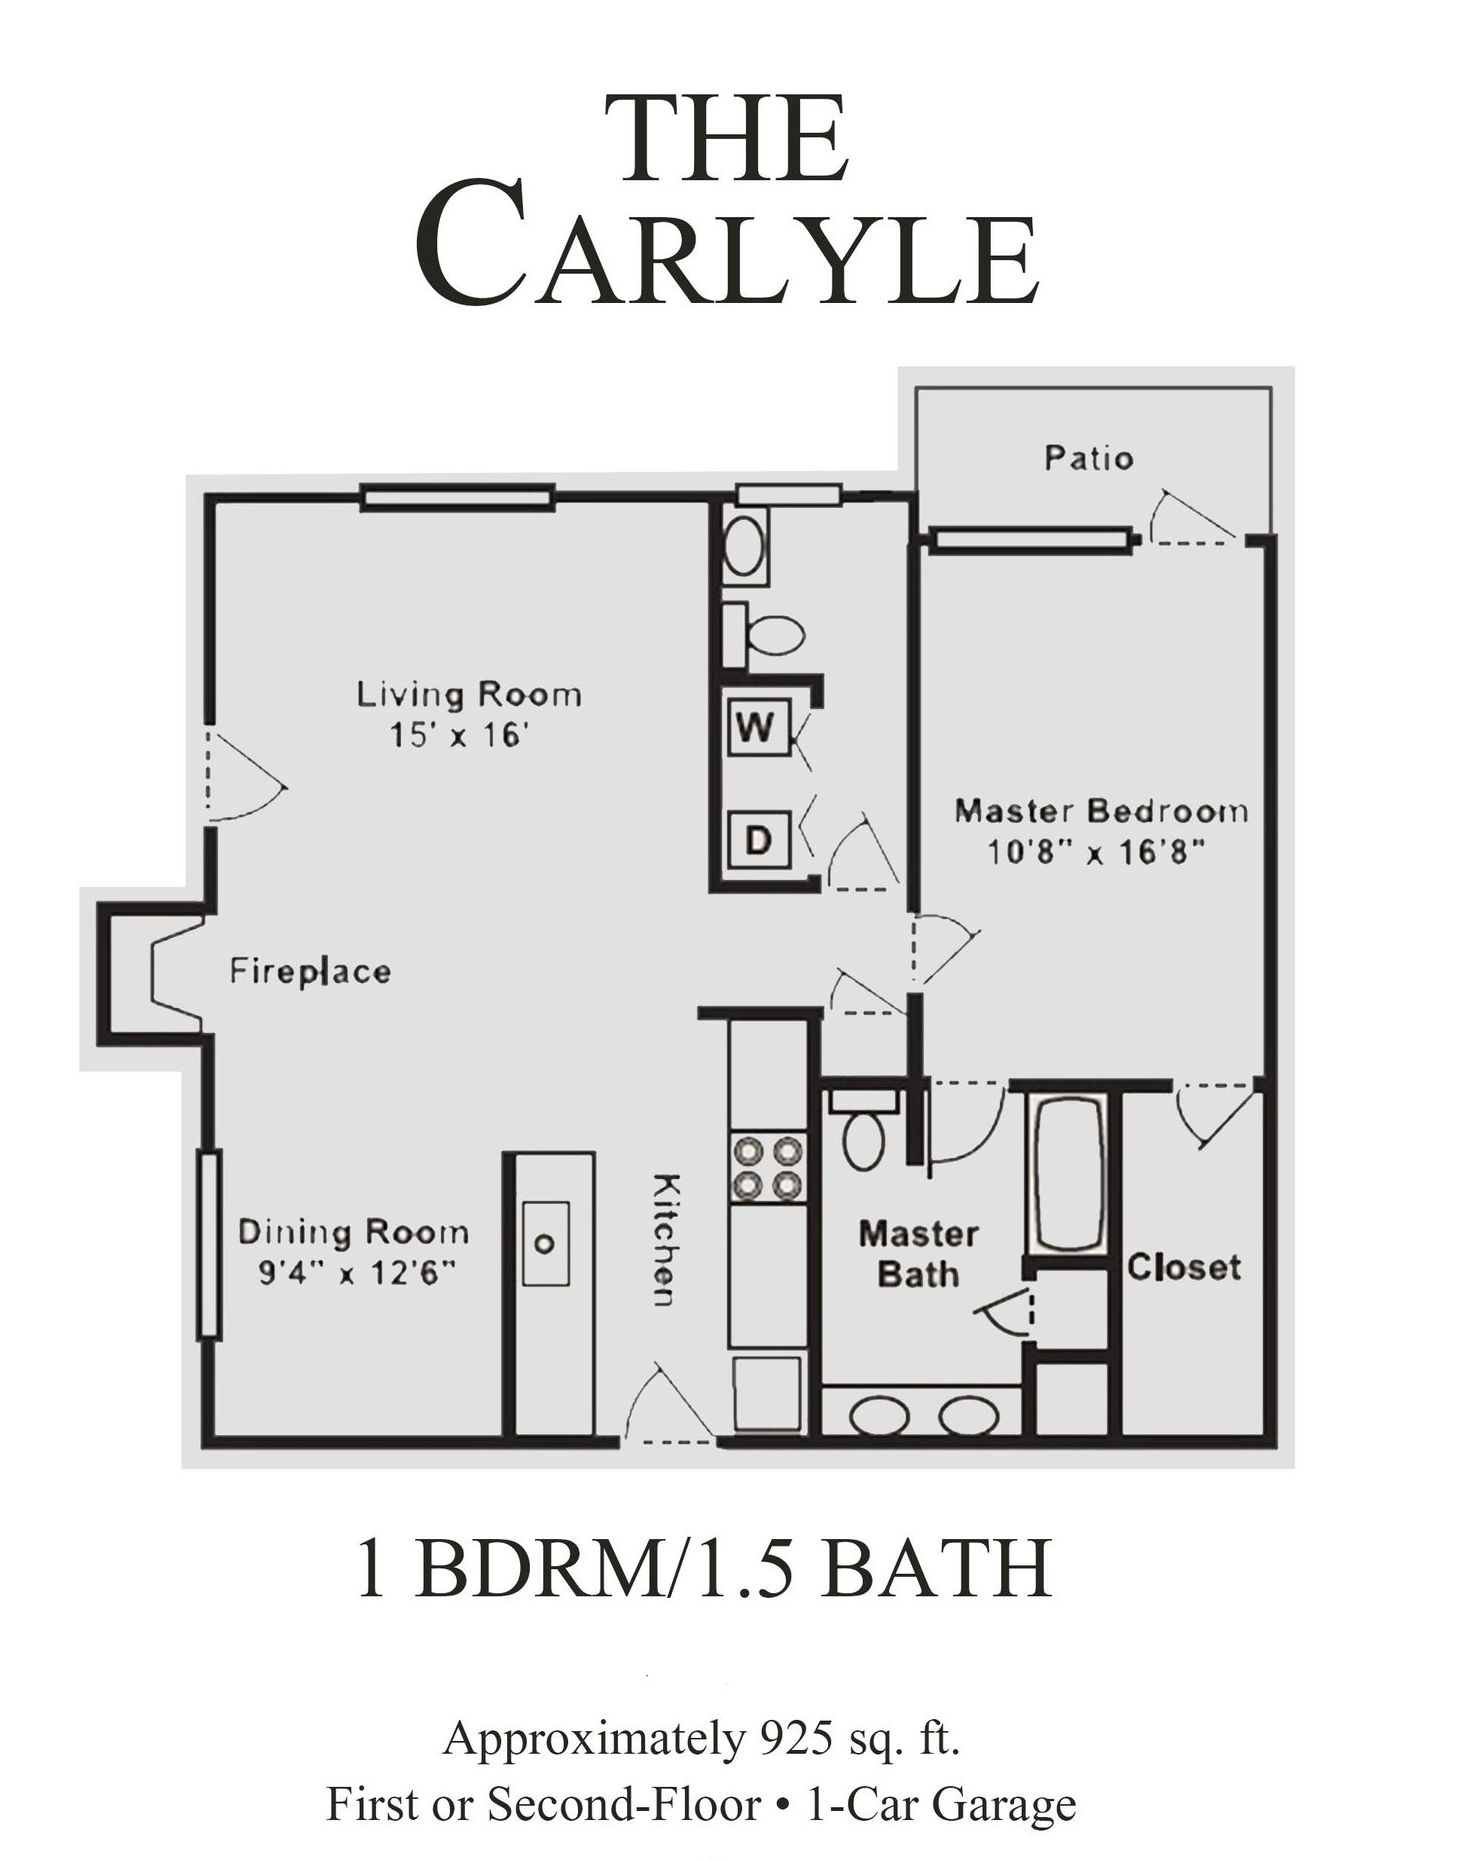 Carlyle floor plan drawing